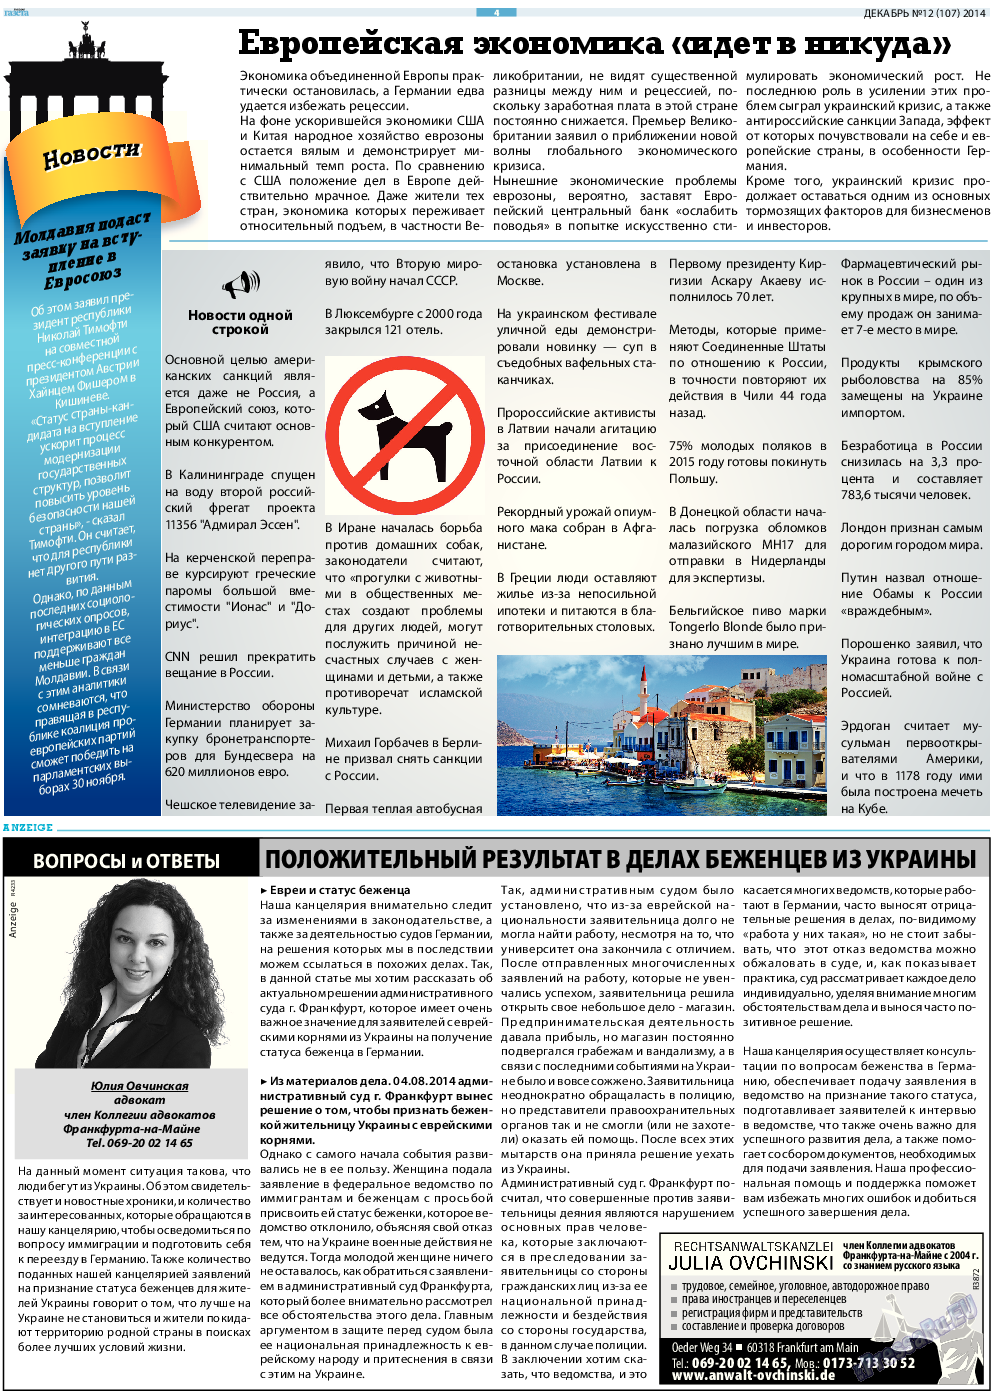 Русская Газета, газета. 2014 №12 стр.4